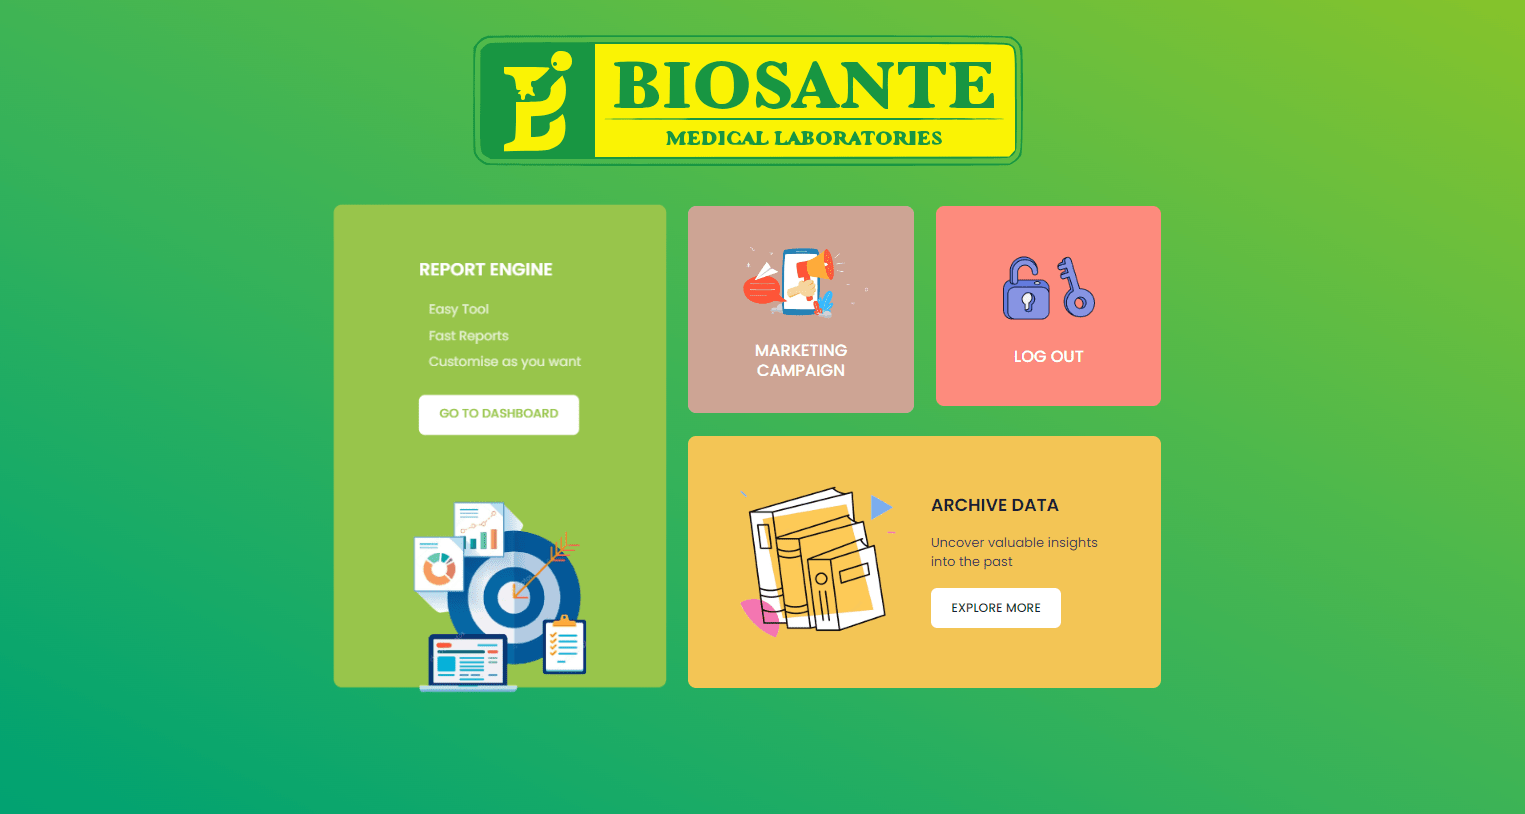 Biosante Web-Based System